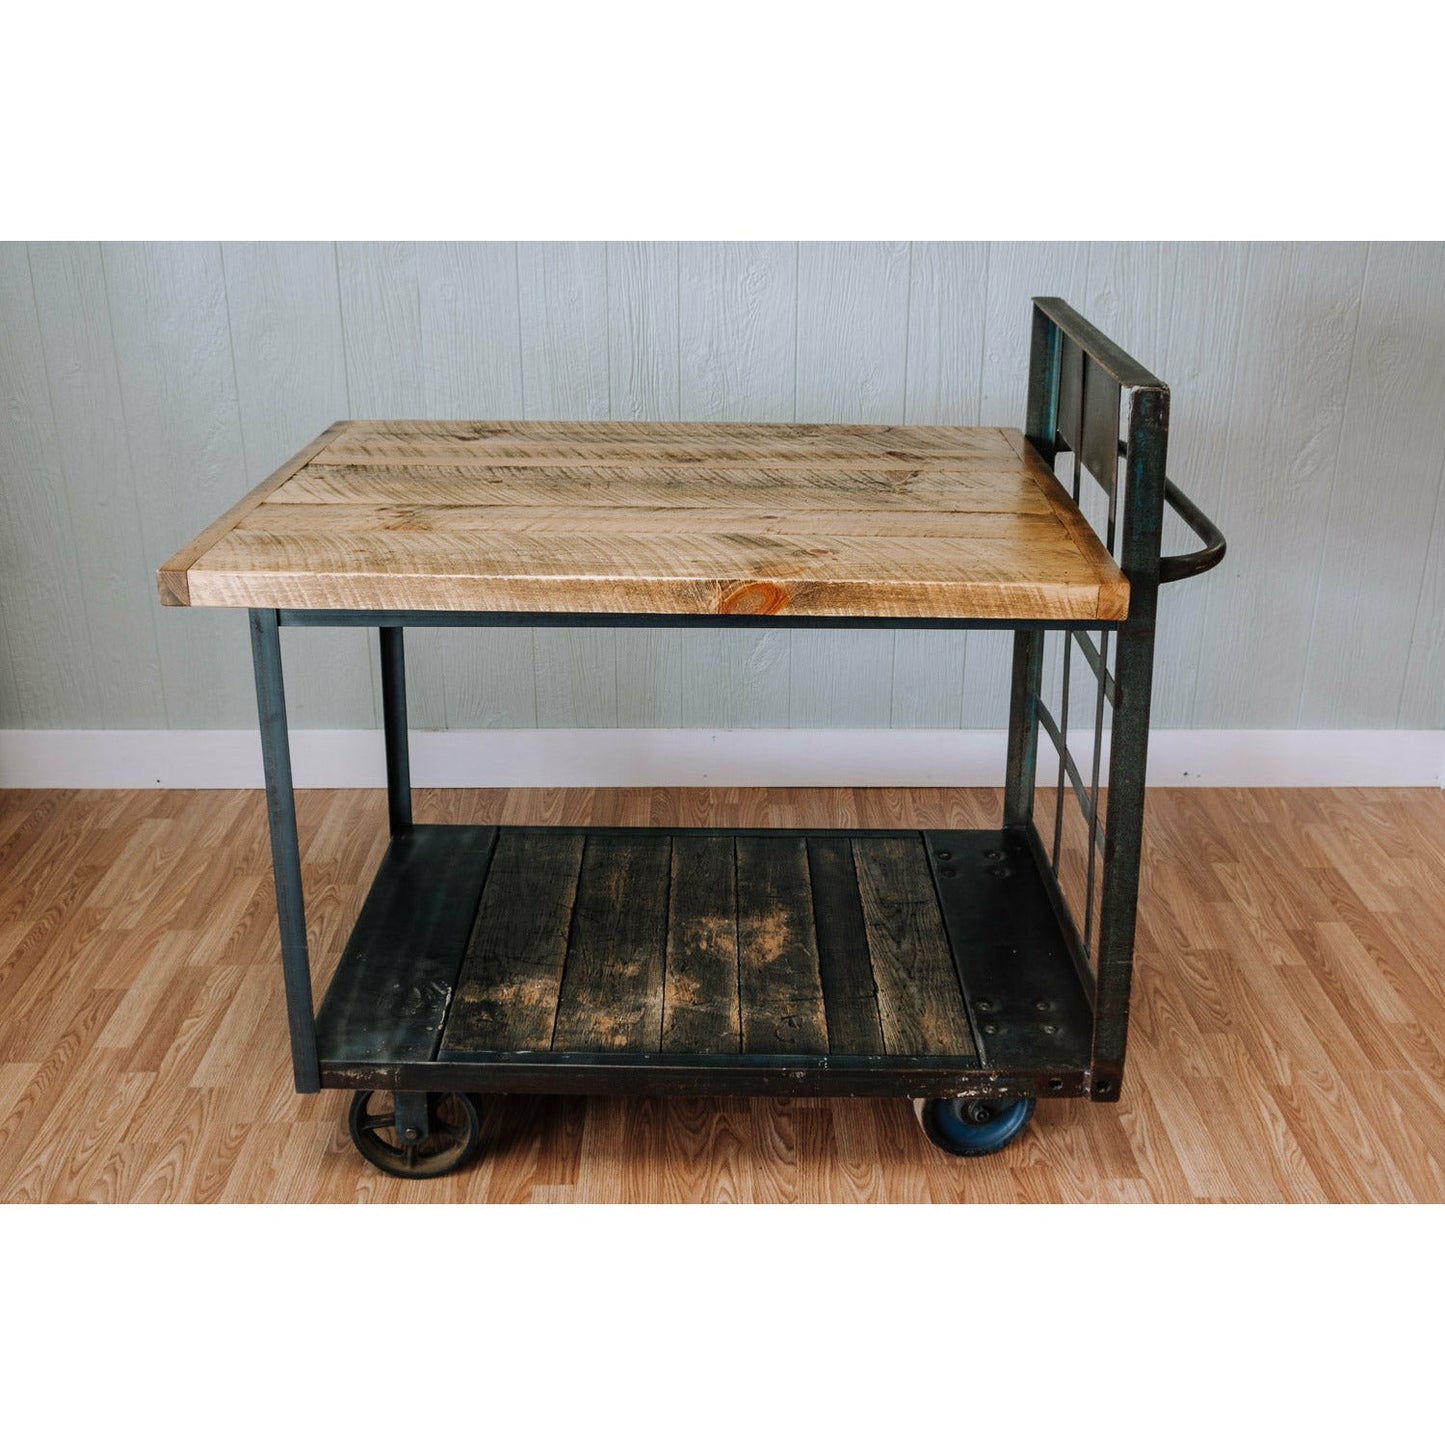 Napa East Vintage Factory Cart Table - The Bar Design